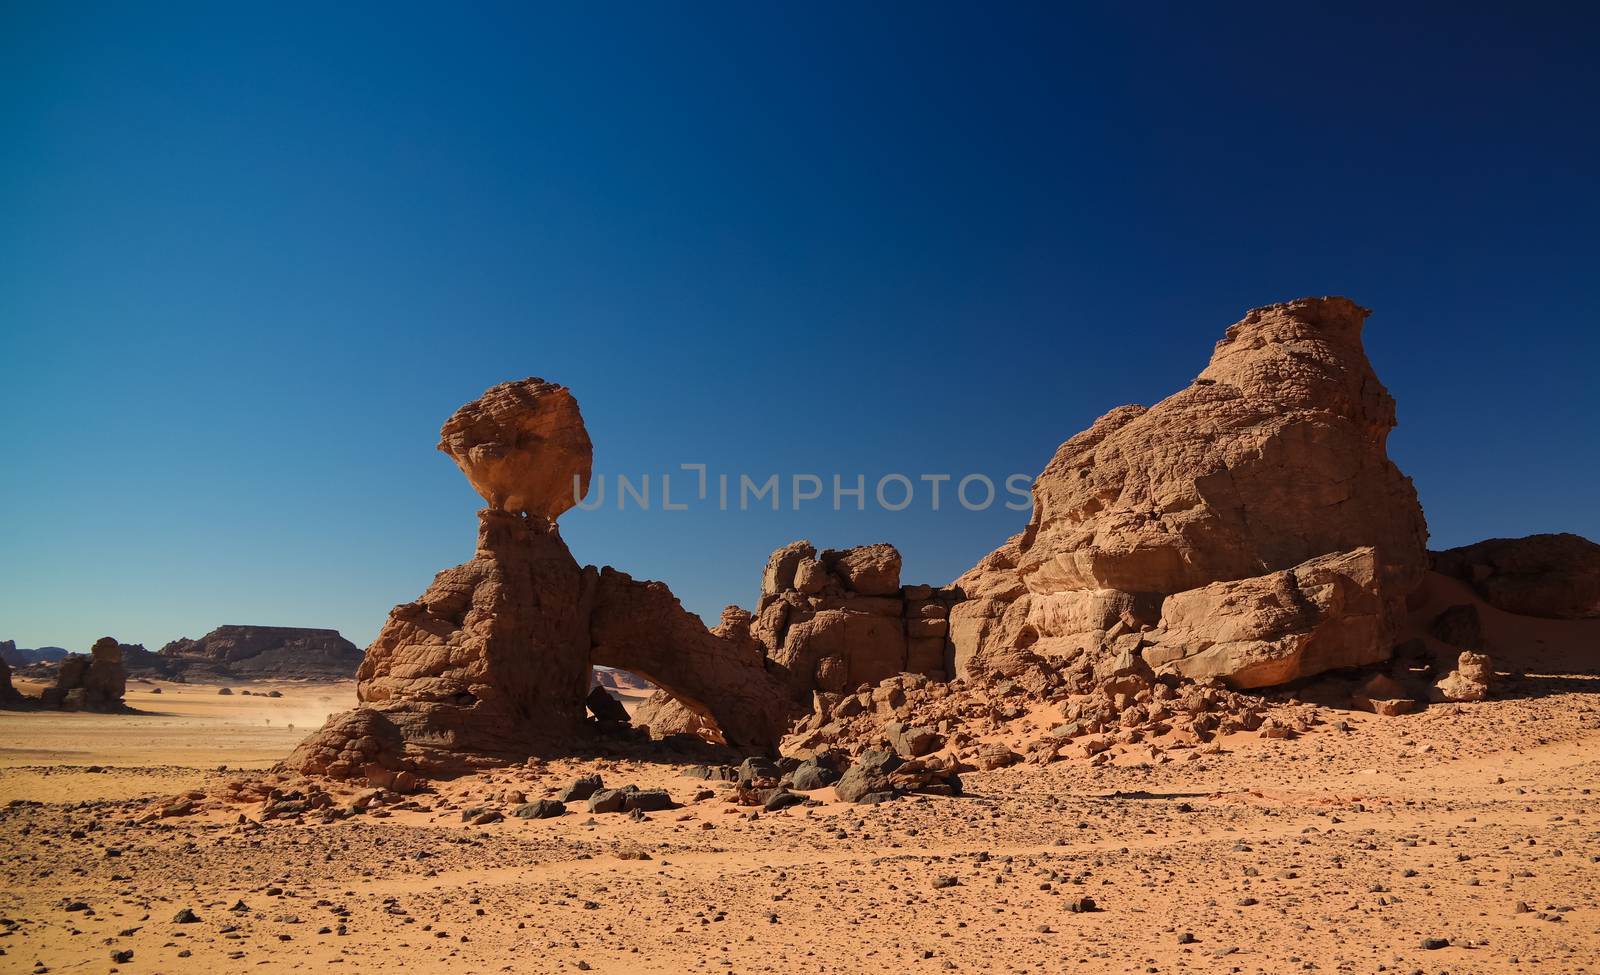 Abstract Rock formation aka pig or hedgehog,Tamezguida, Tassili nAjjer national park, Algeria